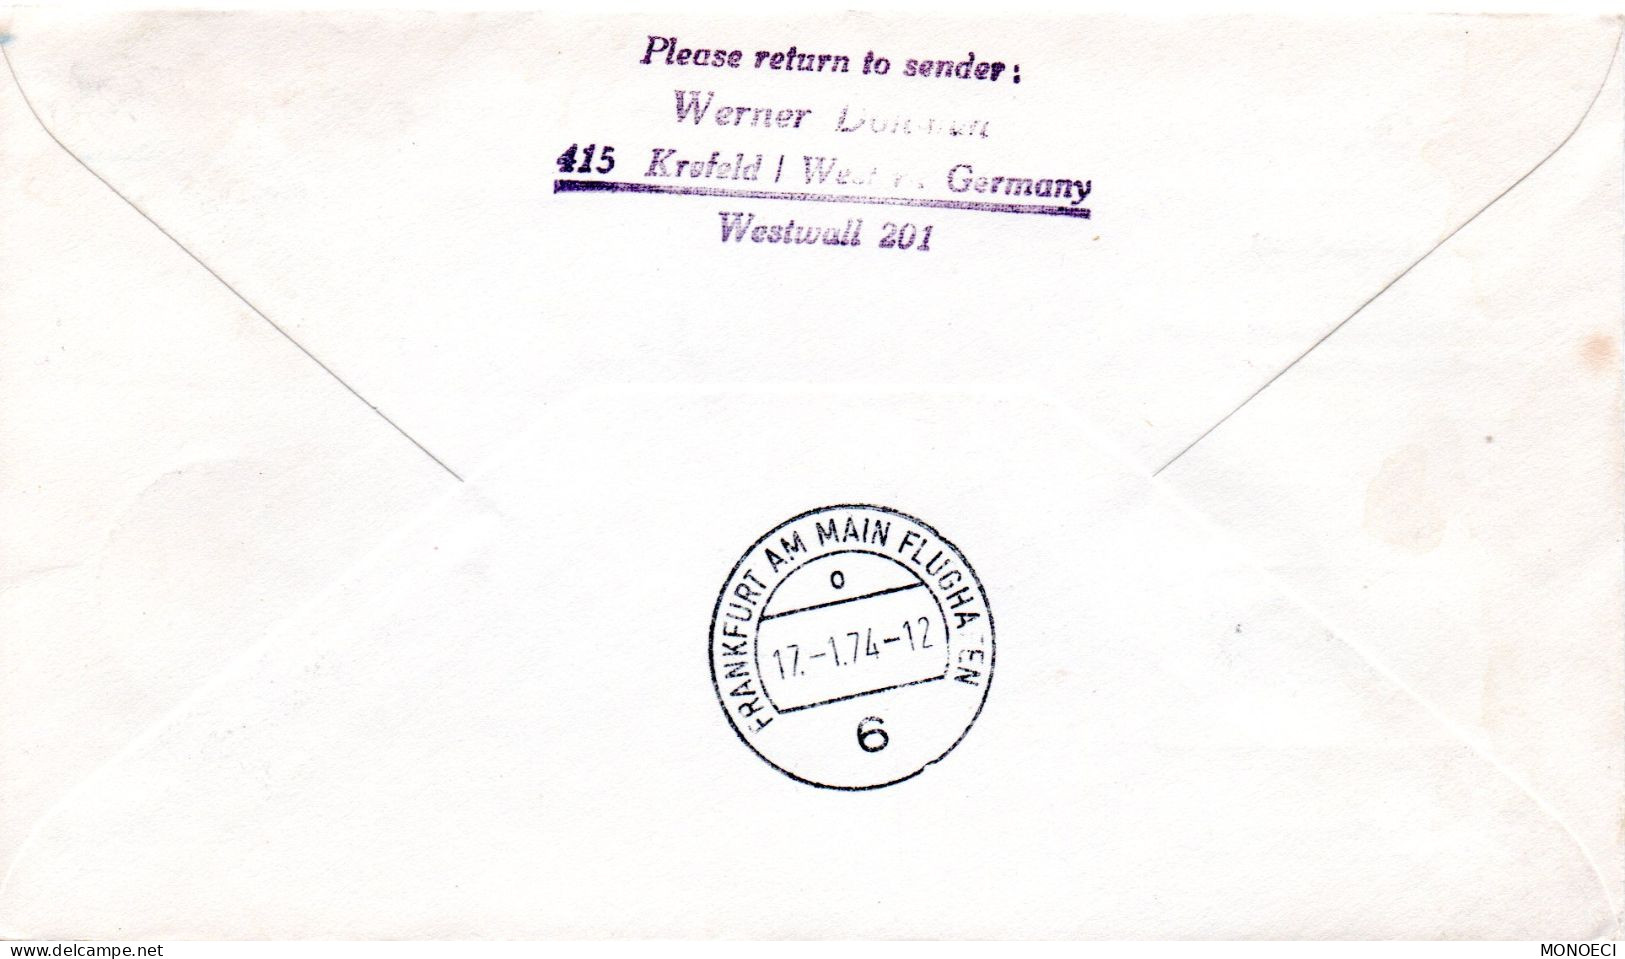 JAPON -- Enveloppe -- Lufthansa DC-10 Air Mail Luftpost 16.1.1974 -- Pour FRANKFURT (Allemagne) - Storia Postale